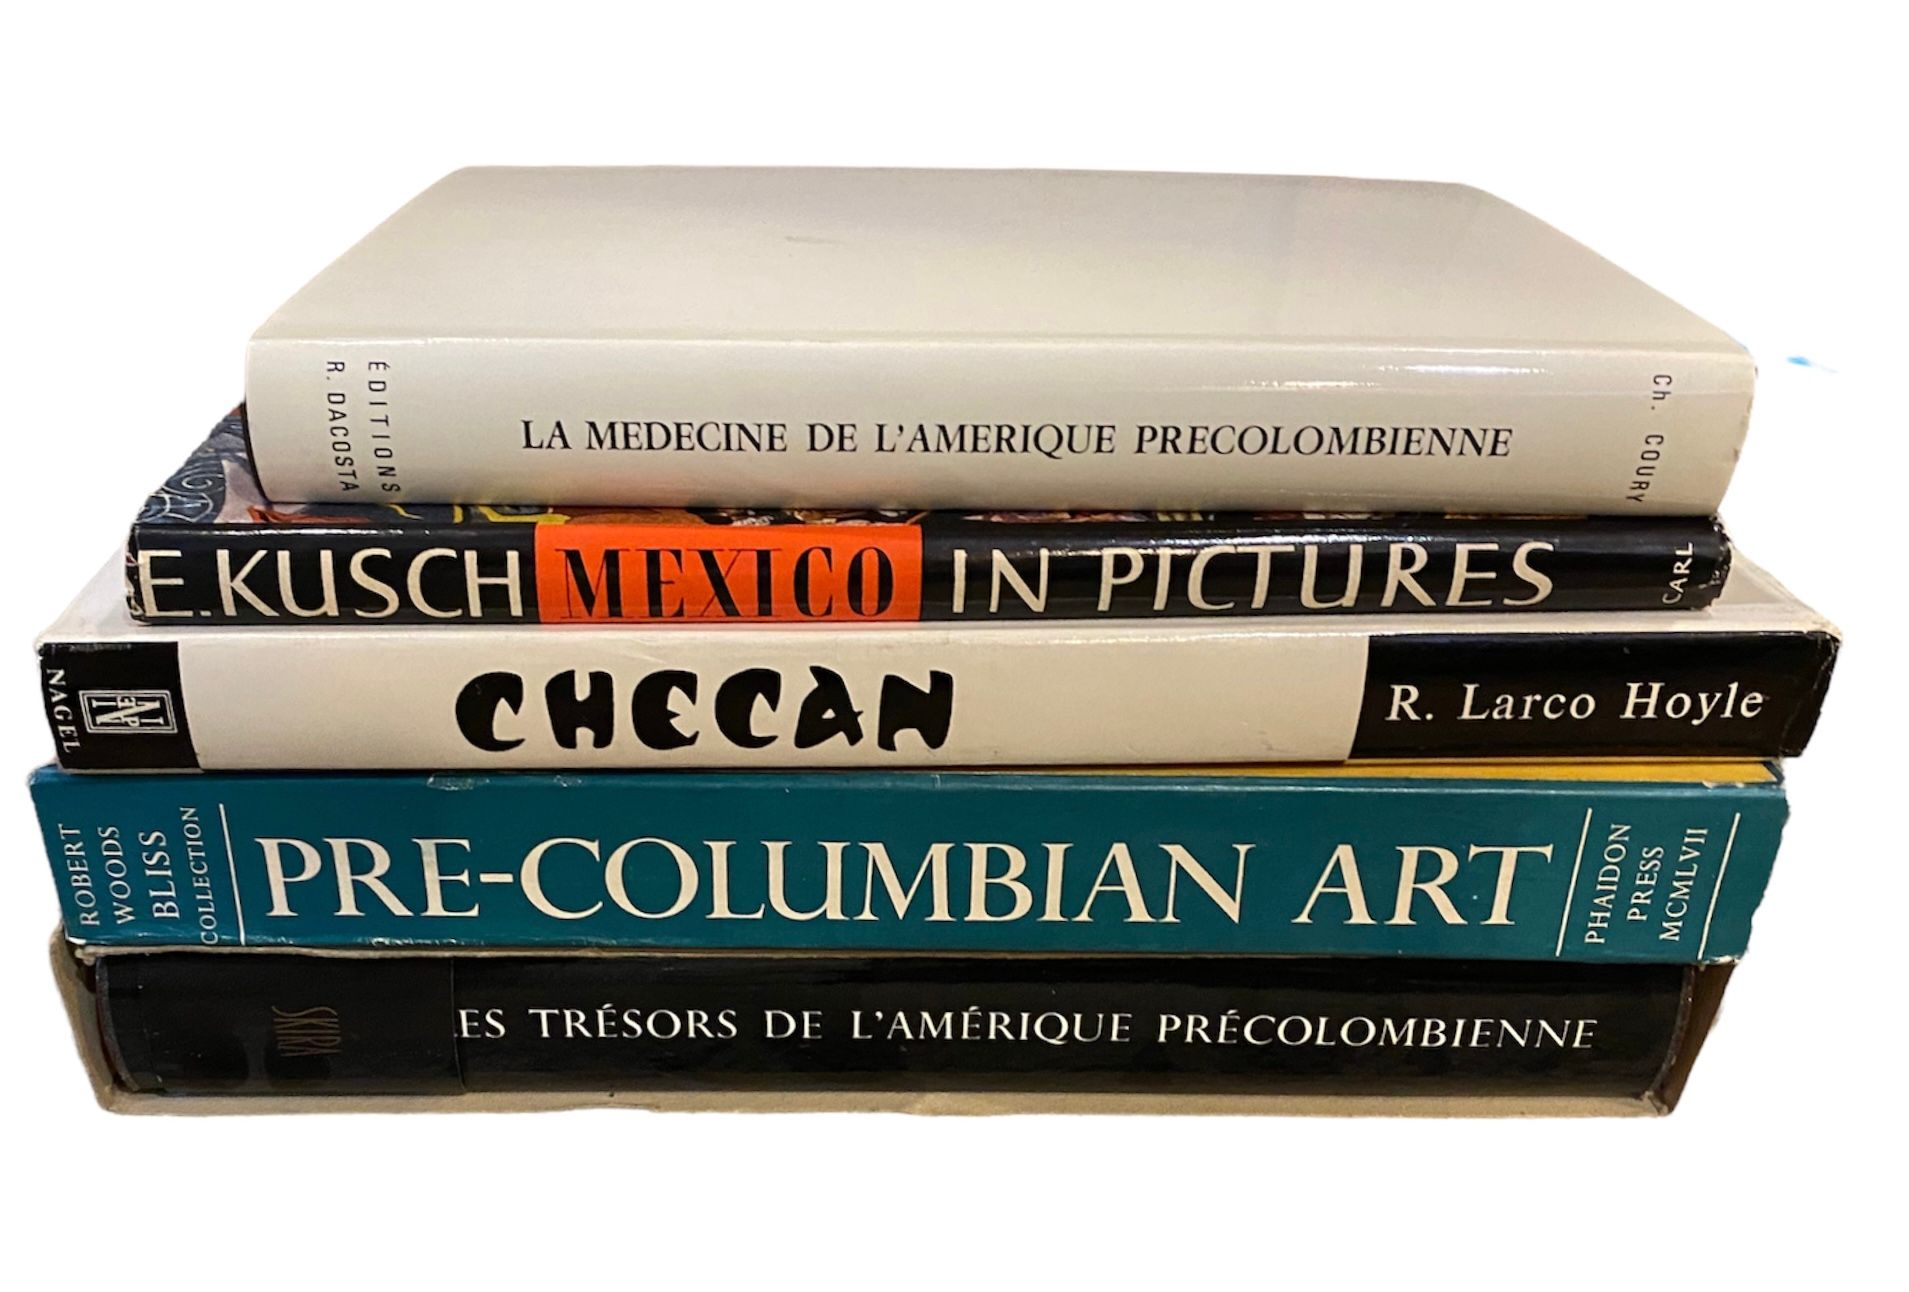 Null 关于前哥伦布艺术、墨西哥和杂项的精美作品集，展览目录类型，精美版本



5本书，状况非常好，有些污损